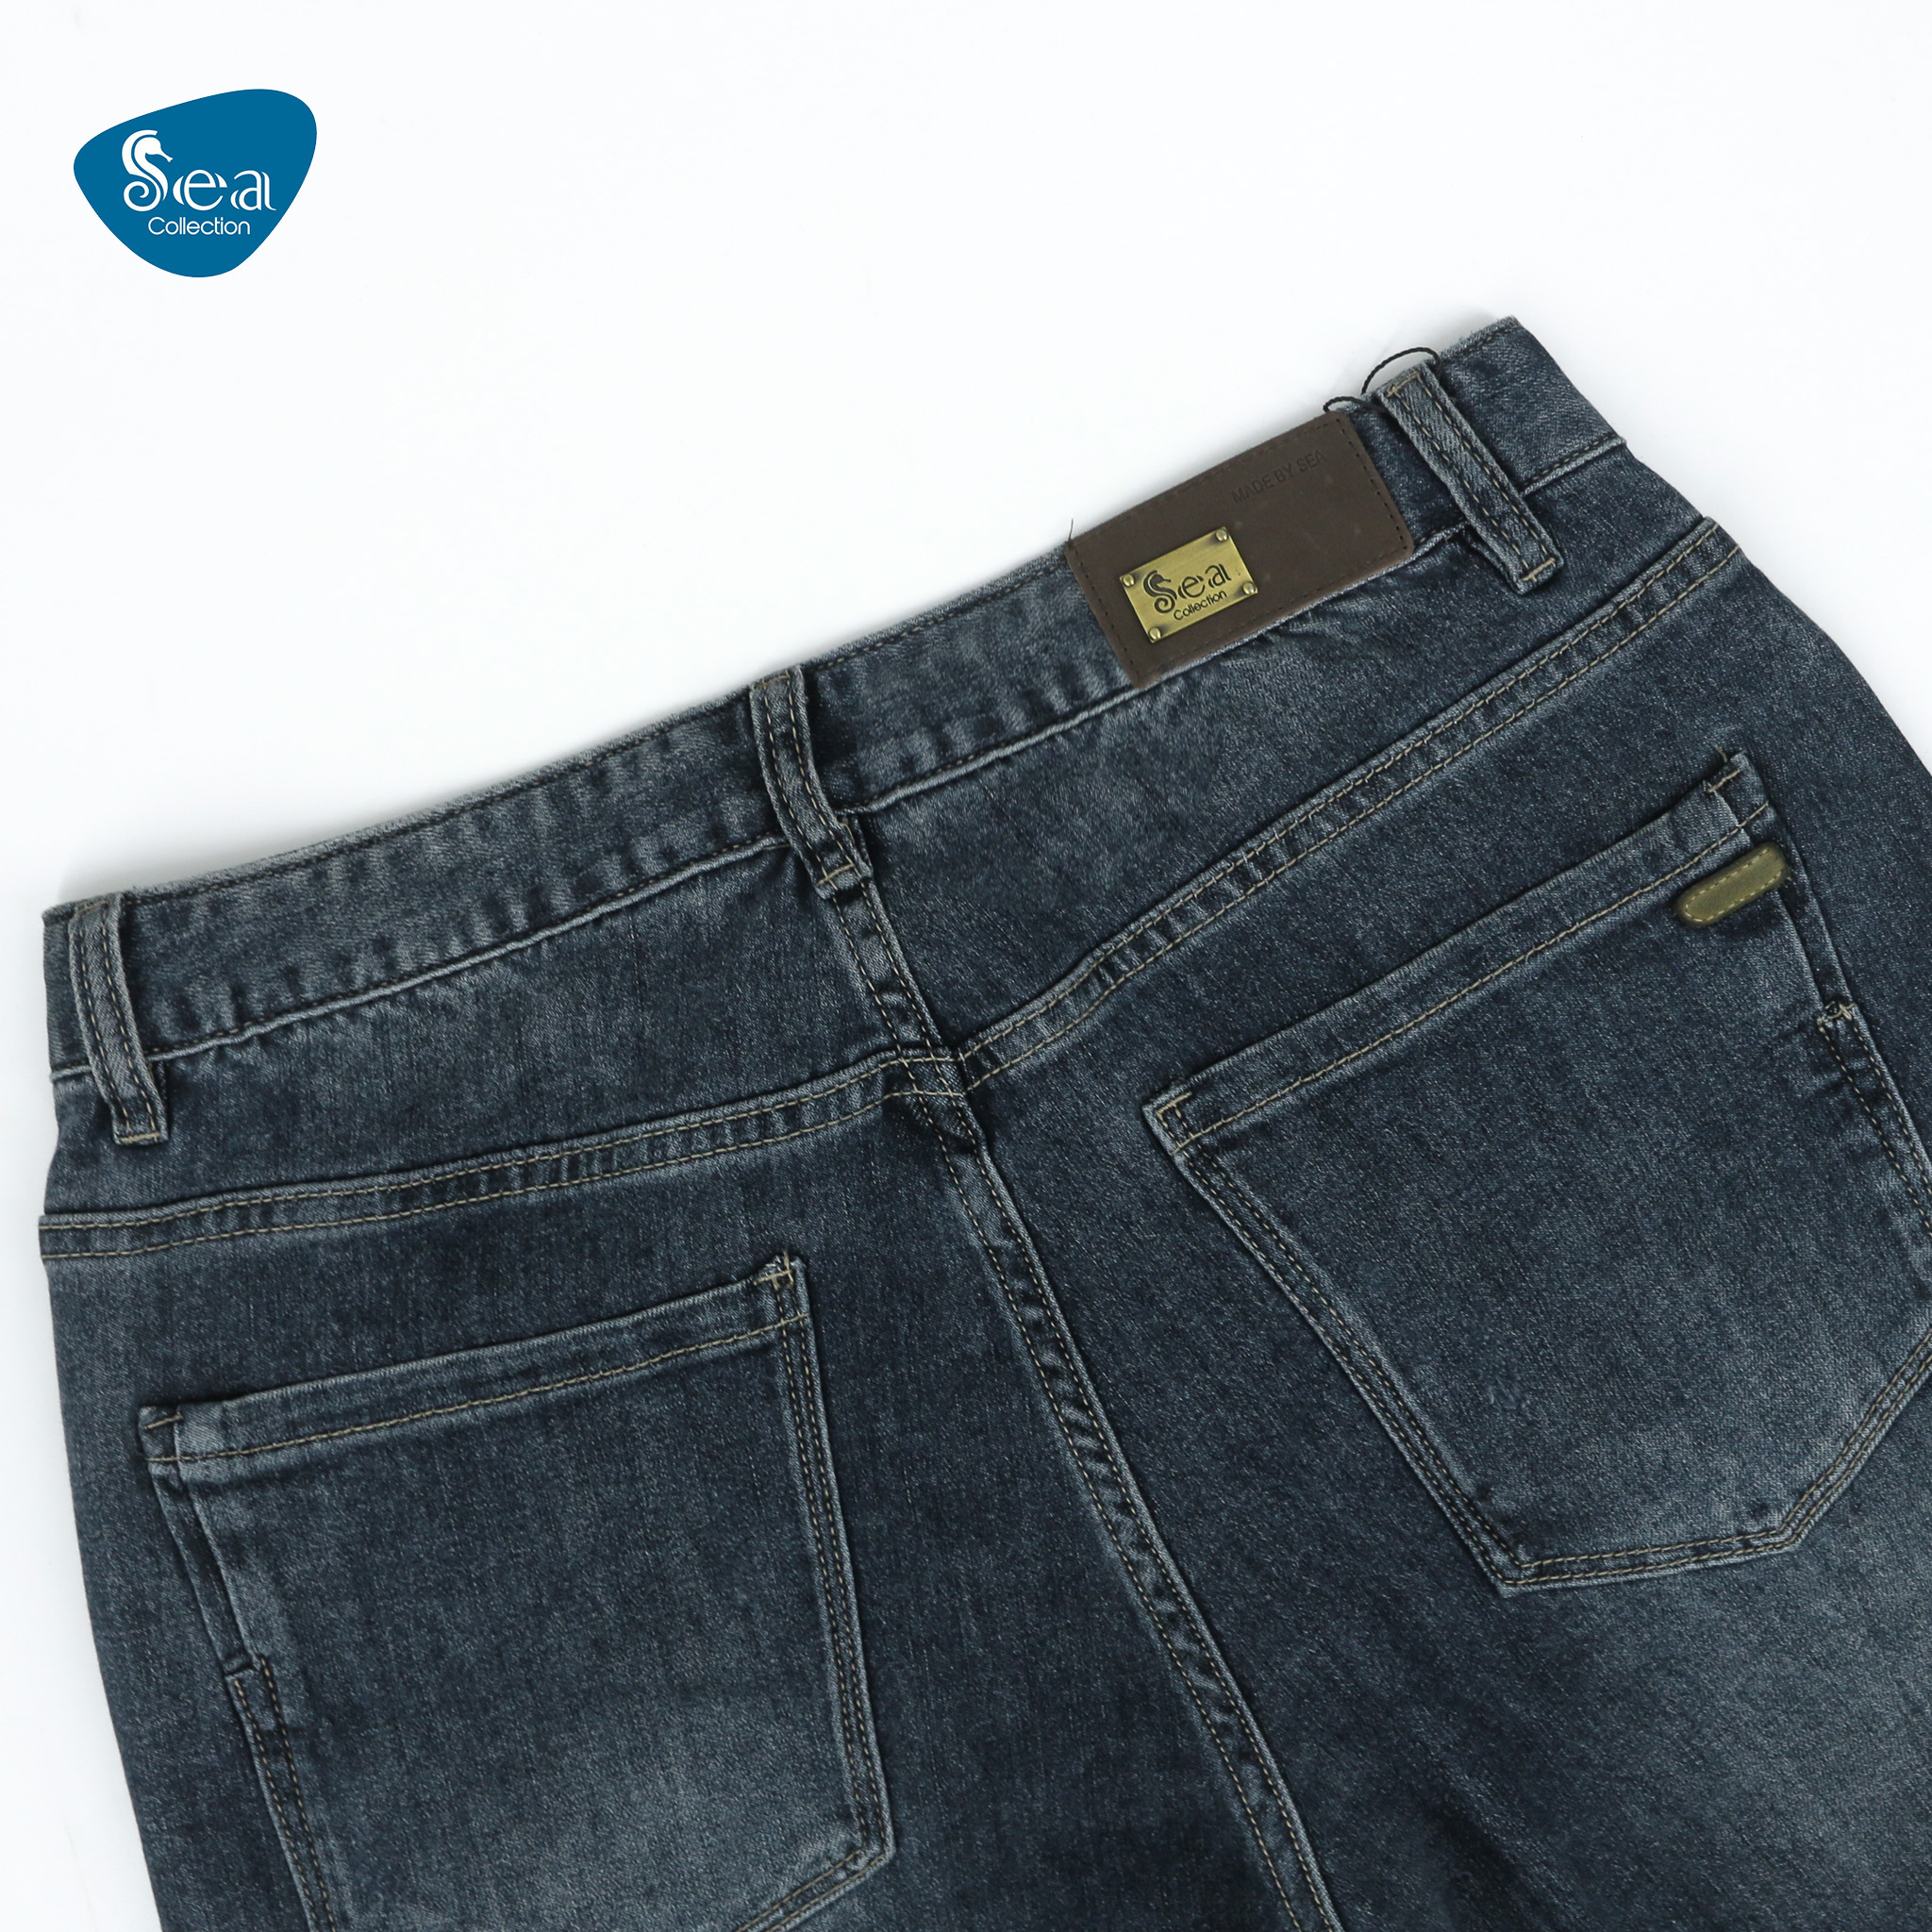 Quần Jeans Nam Sea Collection vải denim mềm mại, co giãn nhẹ, form REGULAR 8243